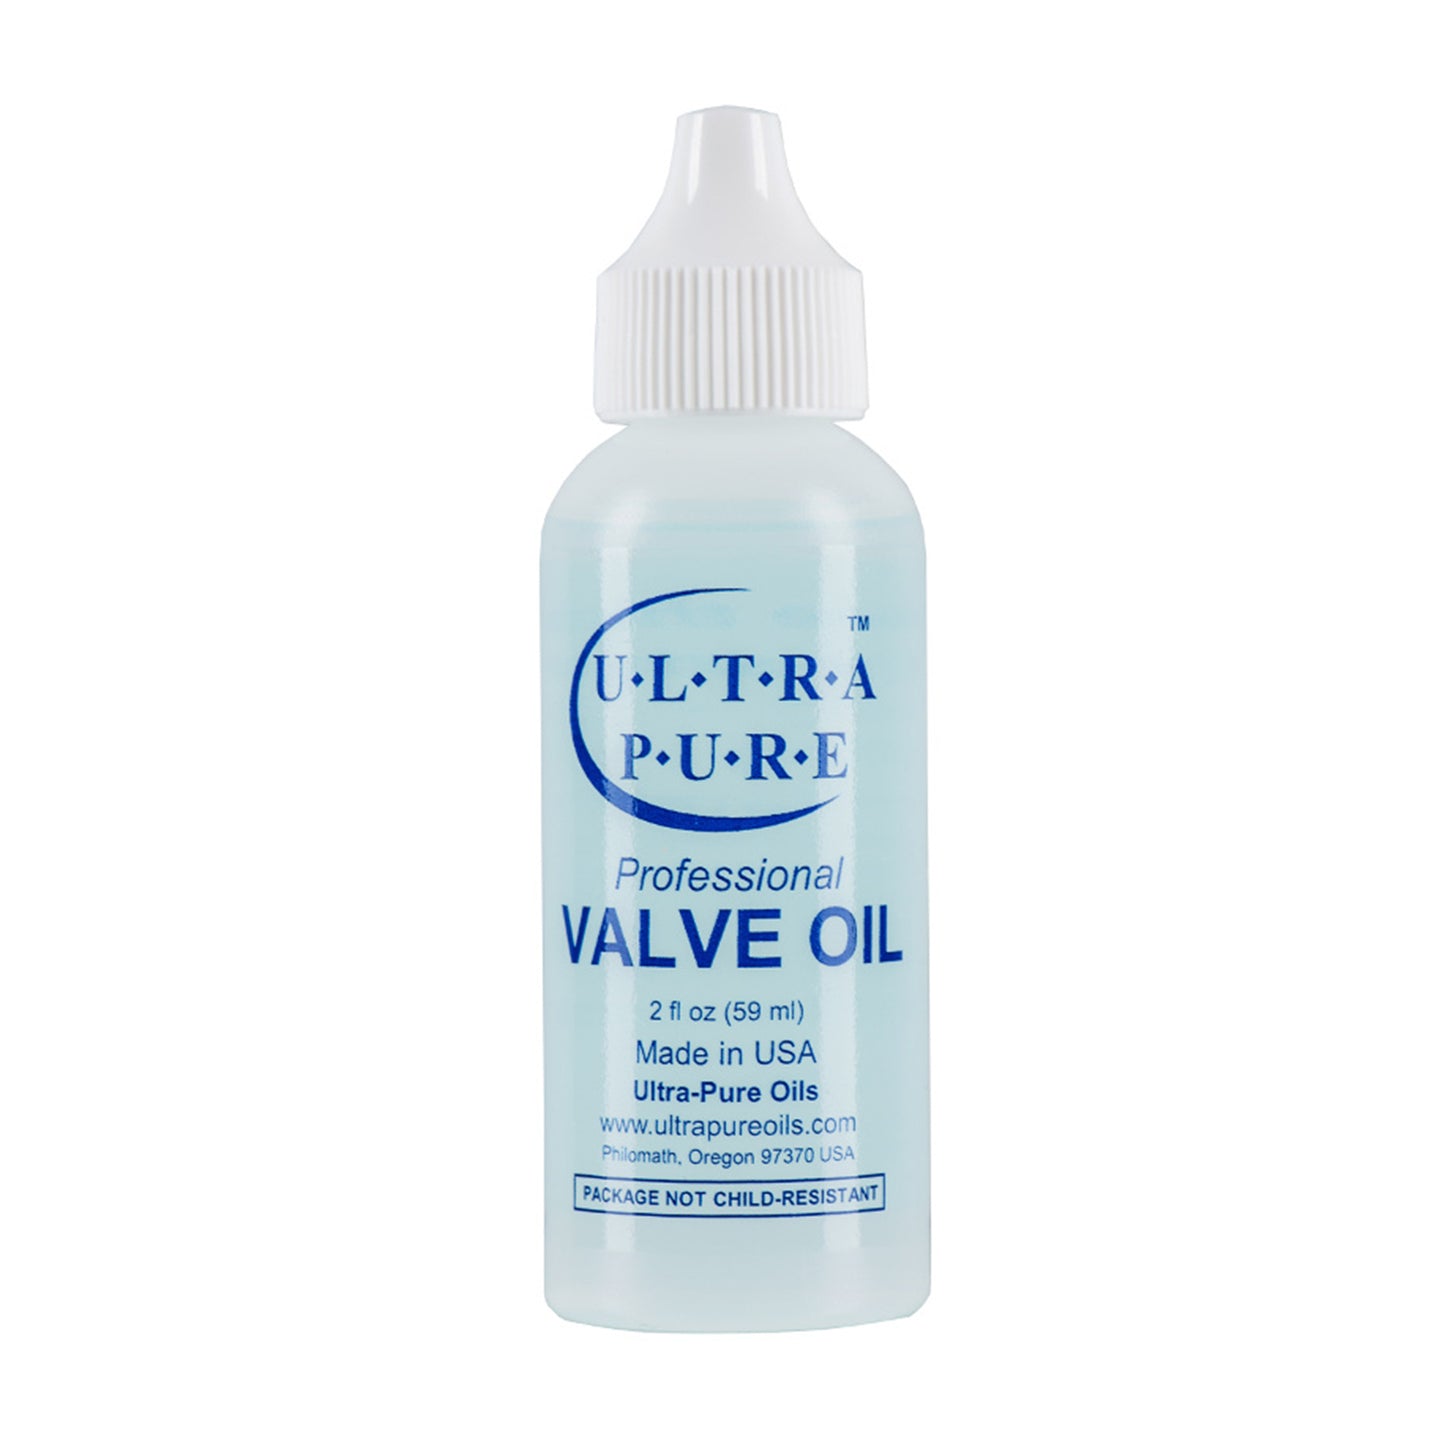 Ultra Pure Valve oil